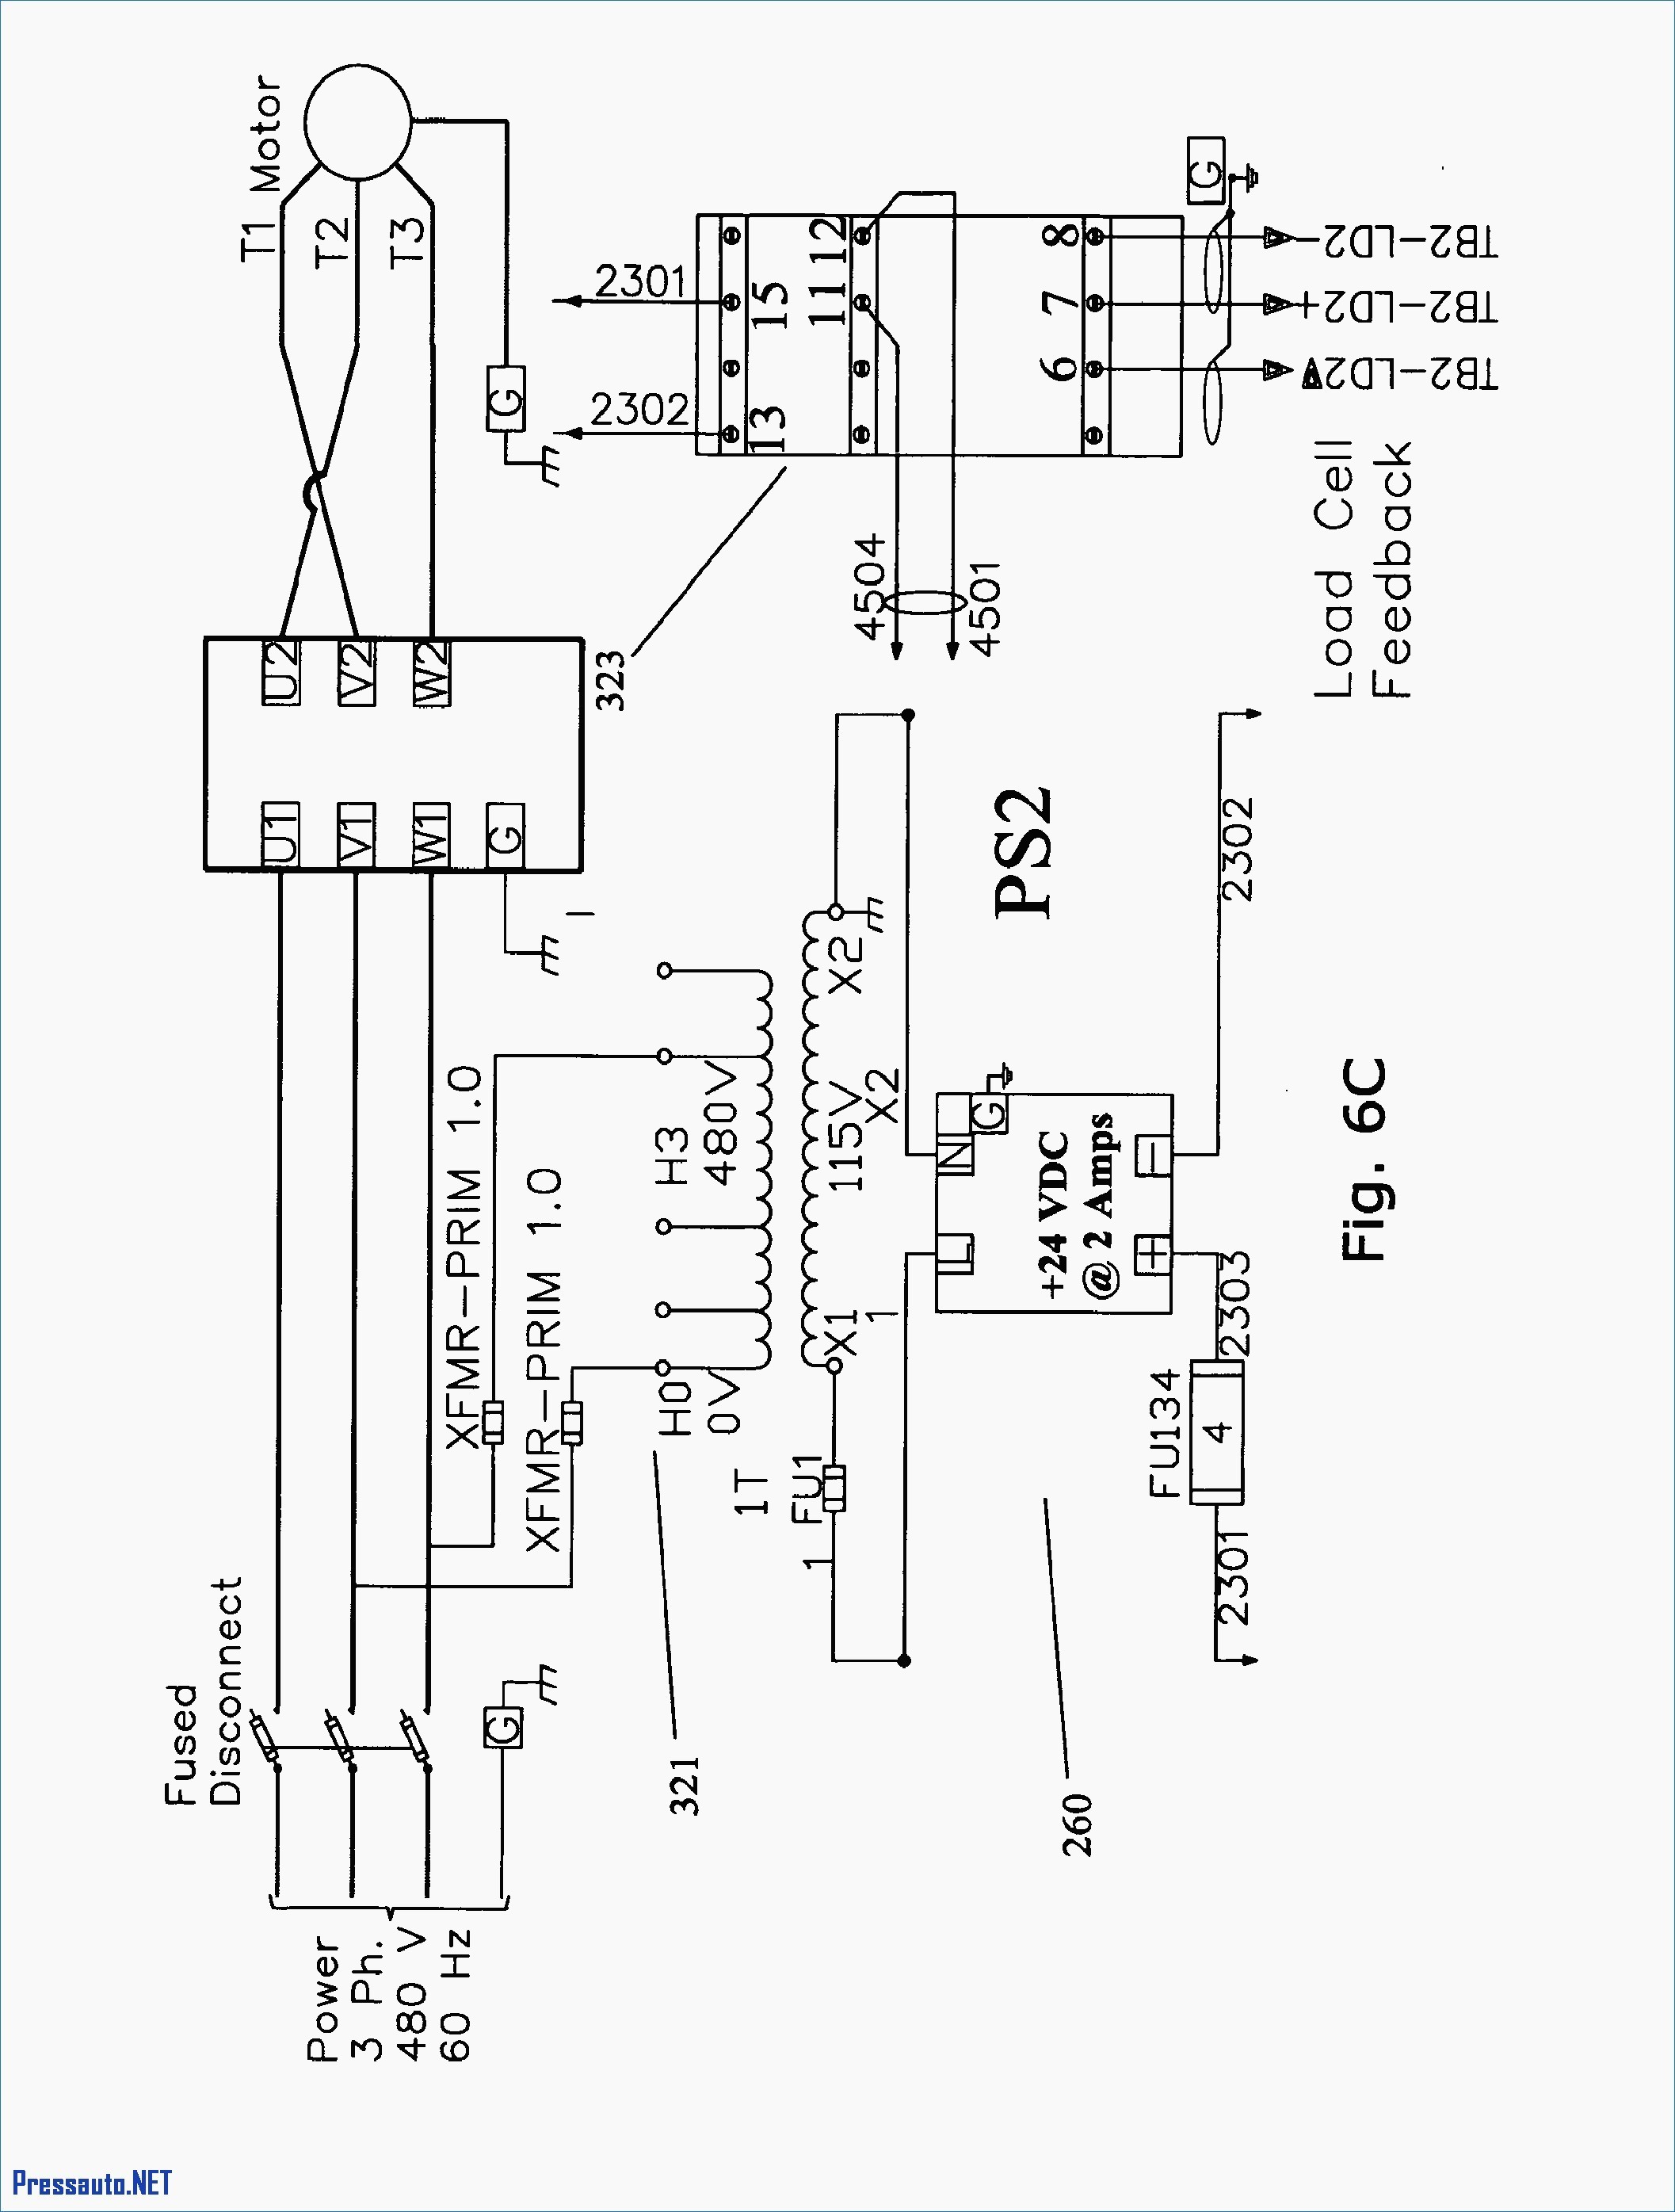 Servo Motor Wiring Diagram Darlington Amplifier Circuit Diagram Tradeofic Wiring Diagram Of Servo Motor Wiring Diagram